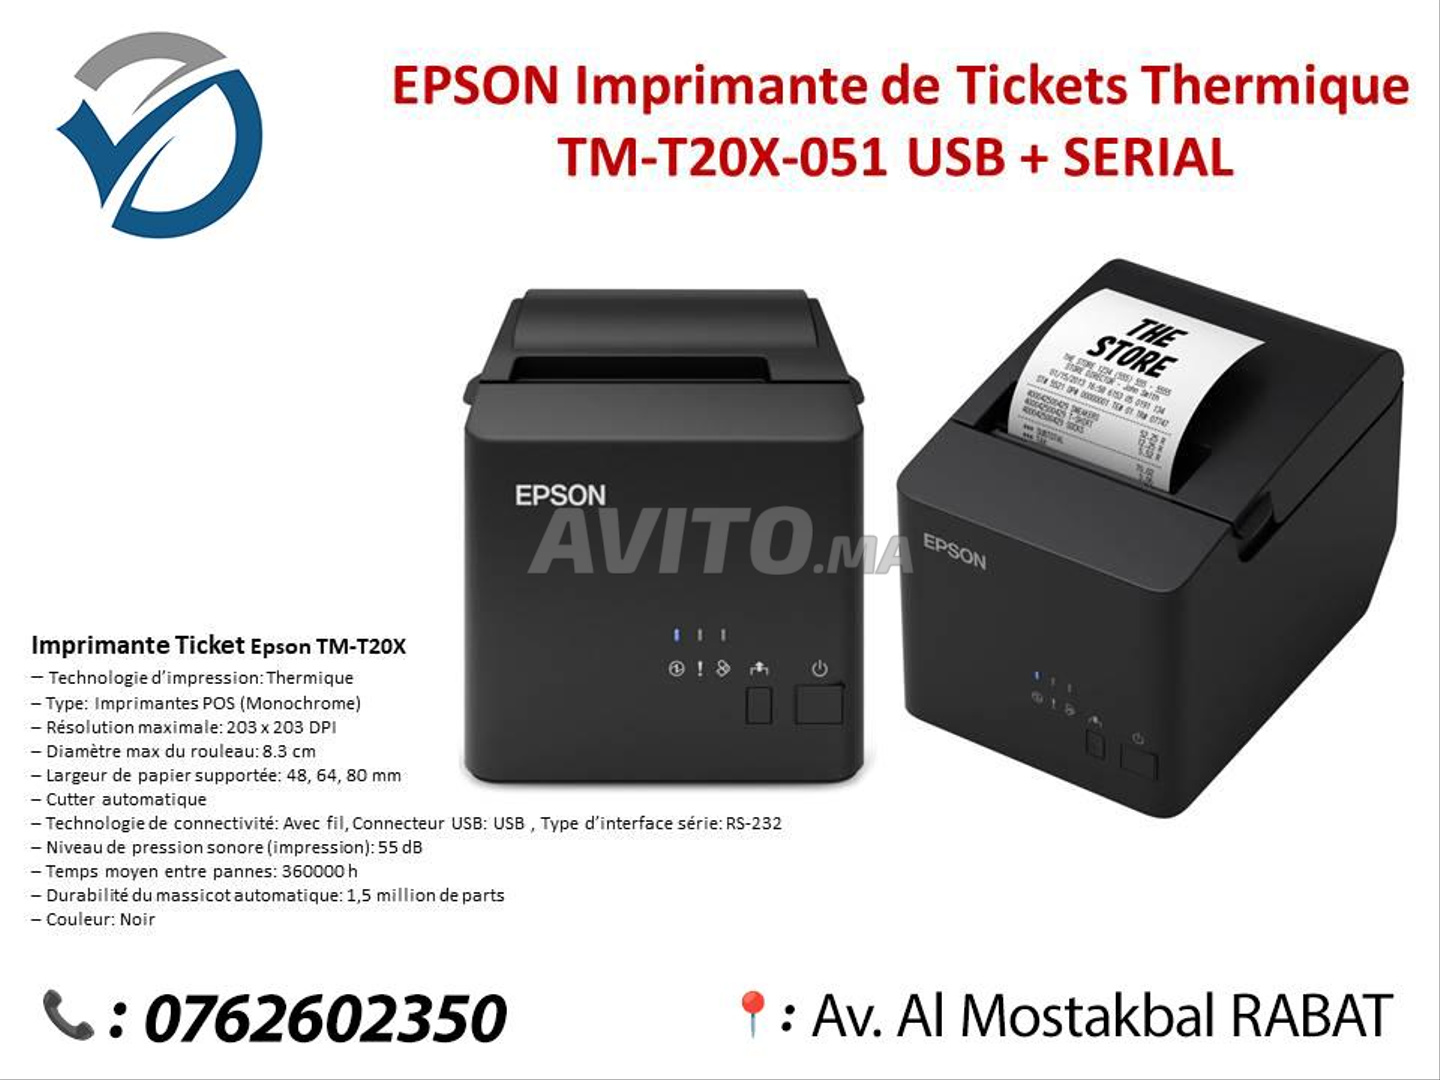 Imprimante de tickets POS EPSON TM-T20III (011) USB + série (C31CH51011)  prix Maroc